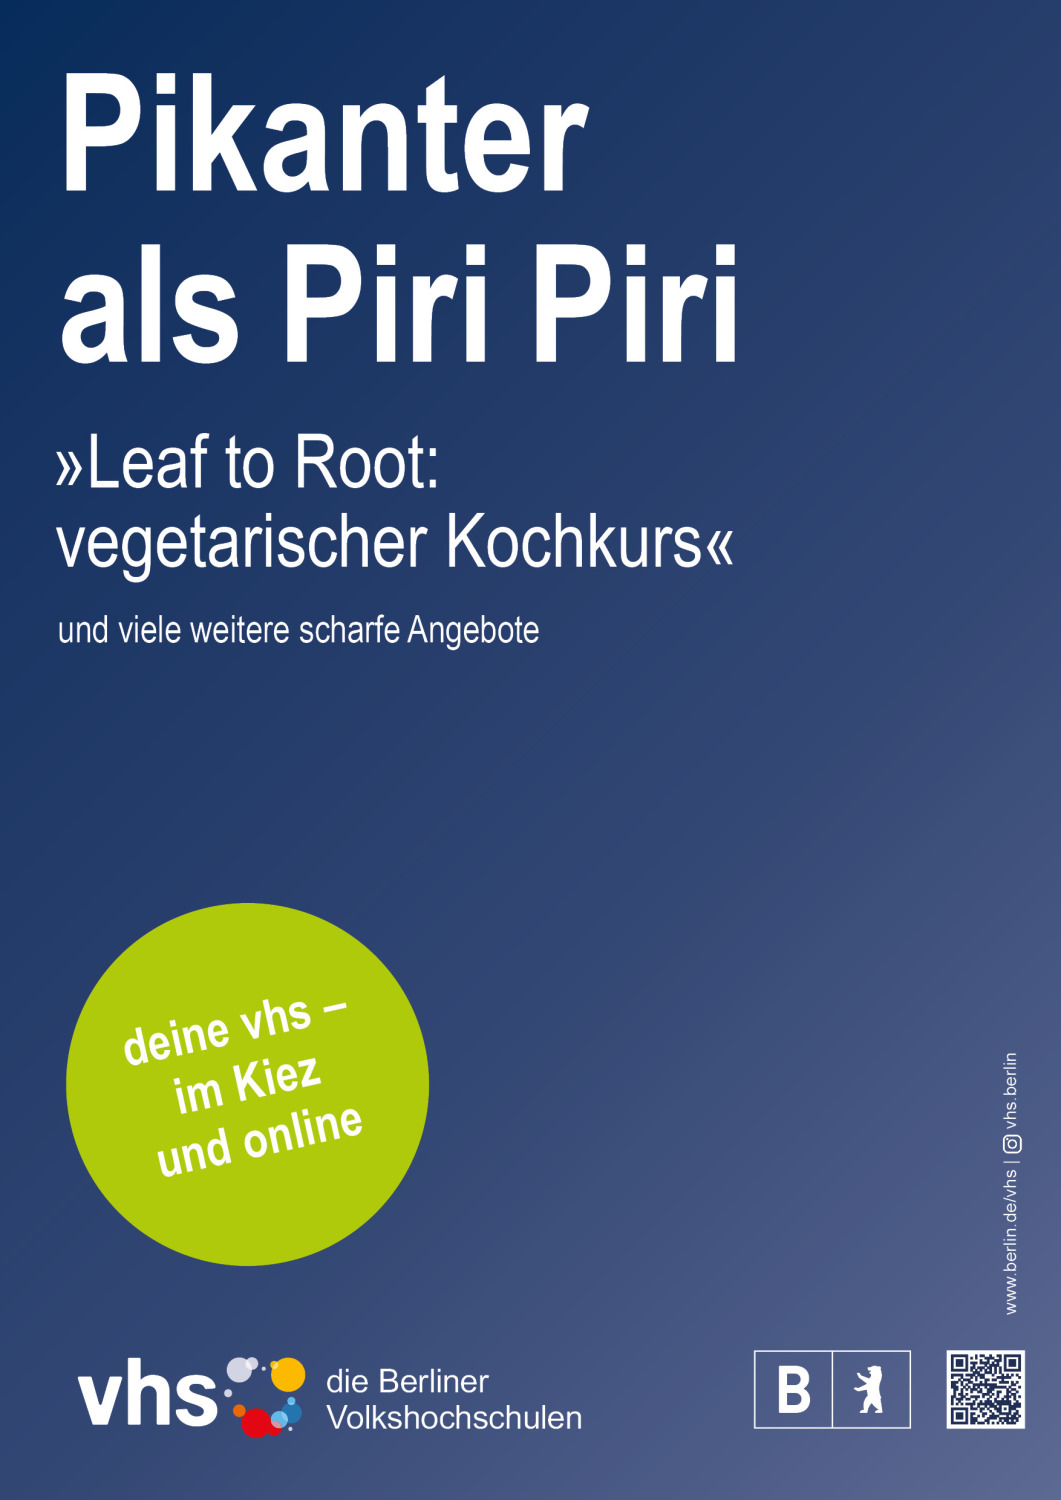 Plakat der Berliner vhs-Kamapage ab 2023 - Pikanter als Piri Piri